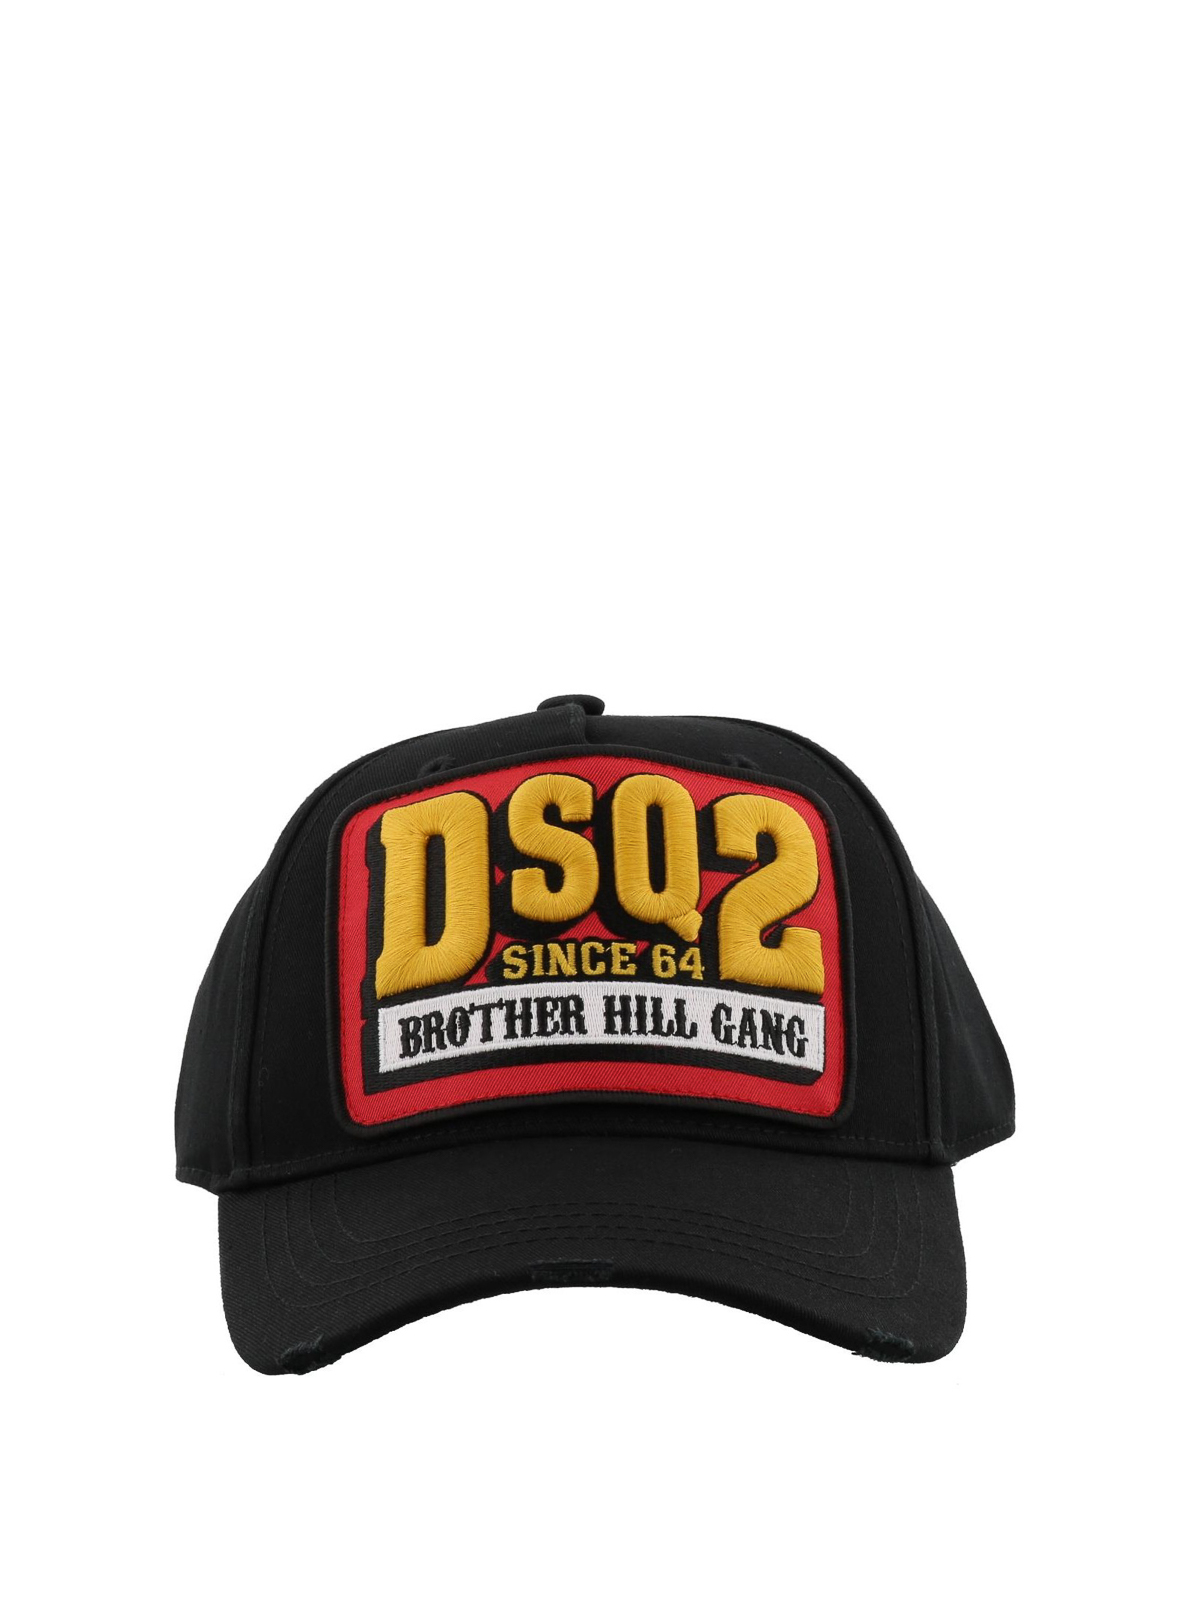 Ongehoorzaamheid meditatie Gezondheid Hats & caps Dsquared2 - DSQ2 Brother Hill Gang black baseball cap -  BCM008405C000012124